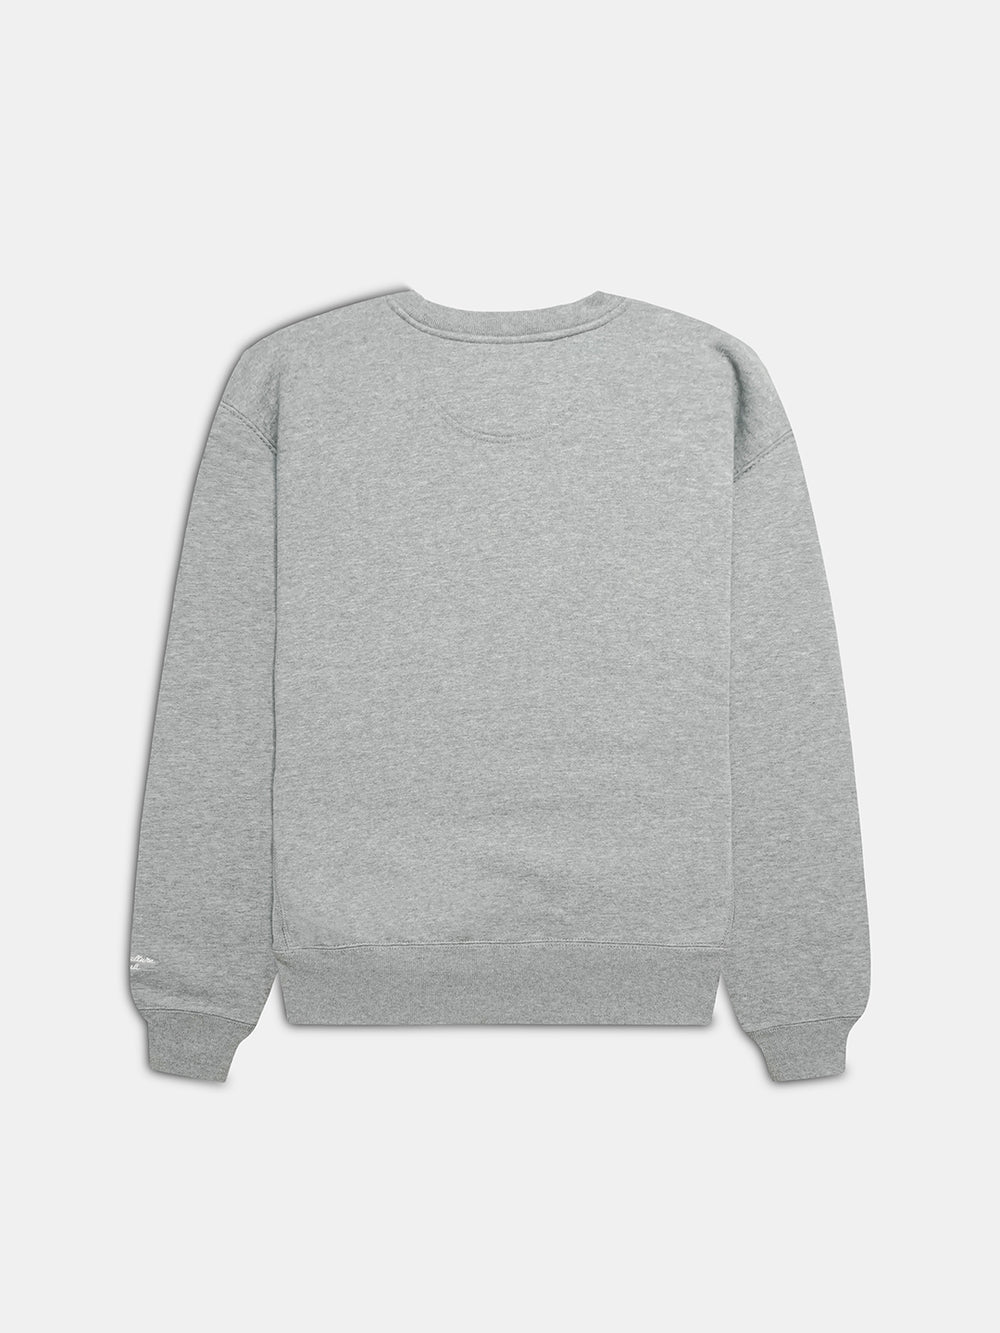 The Shop By Hand Crewneck Sweatshirt Grey - Back